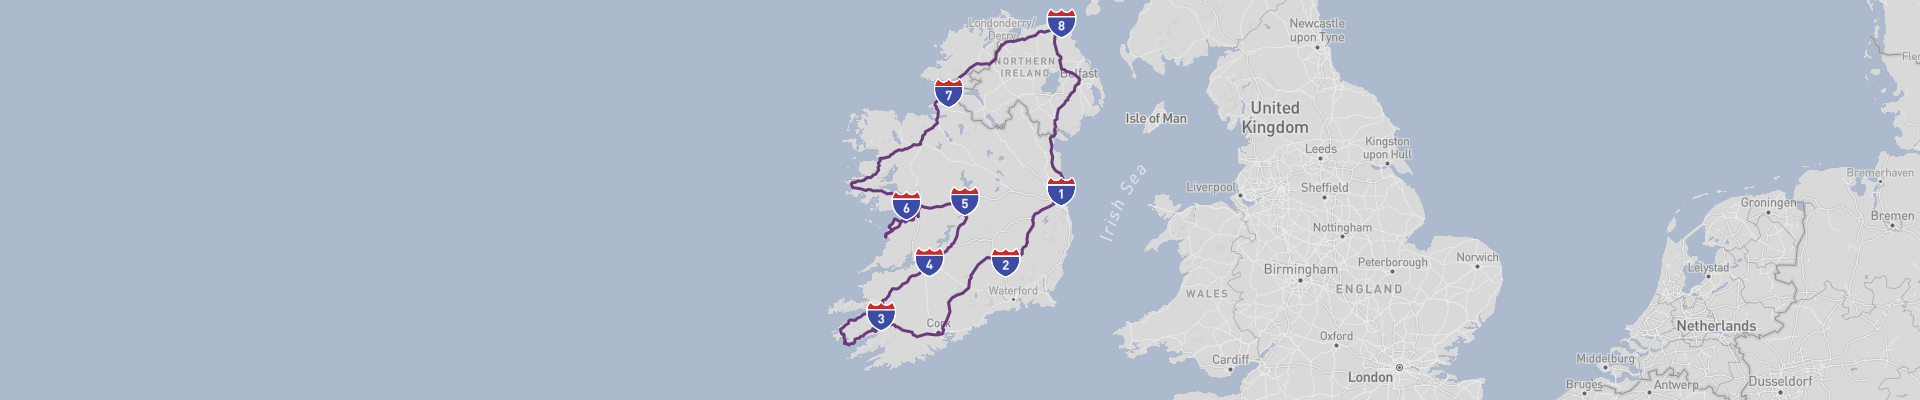 Itinéraire Total Irlande 